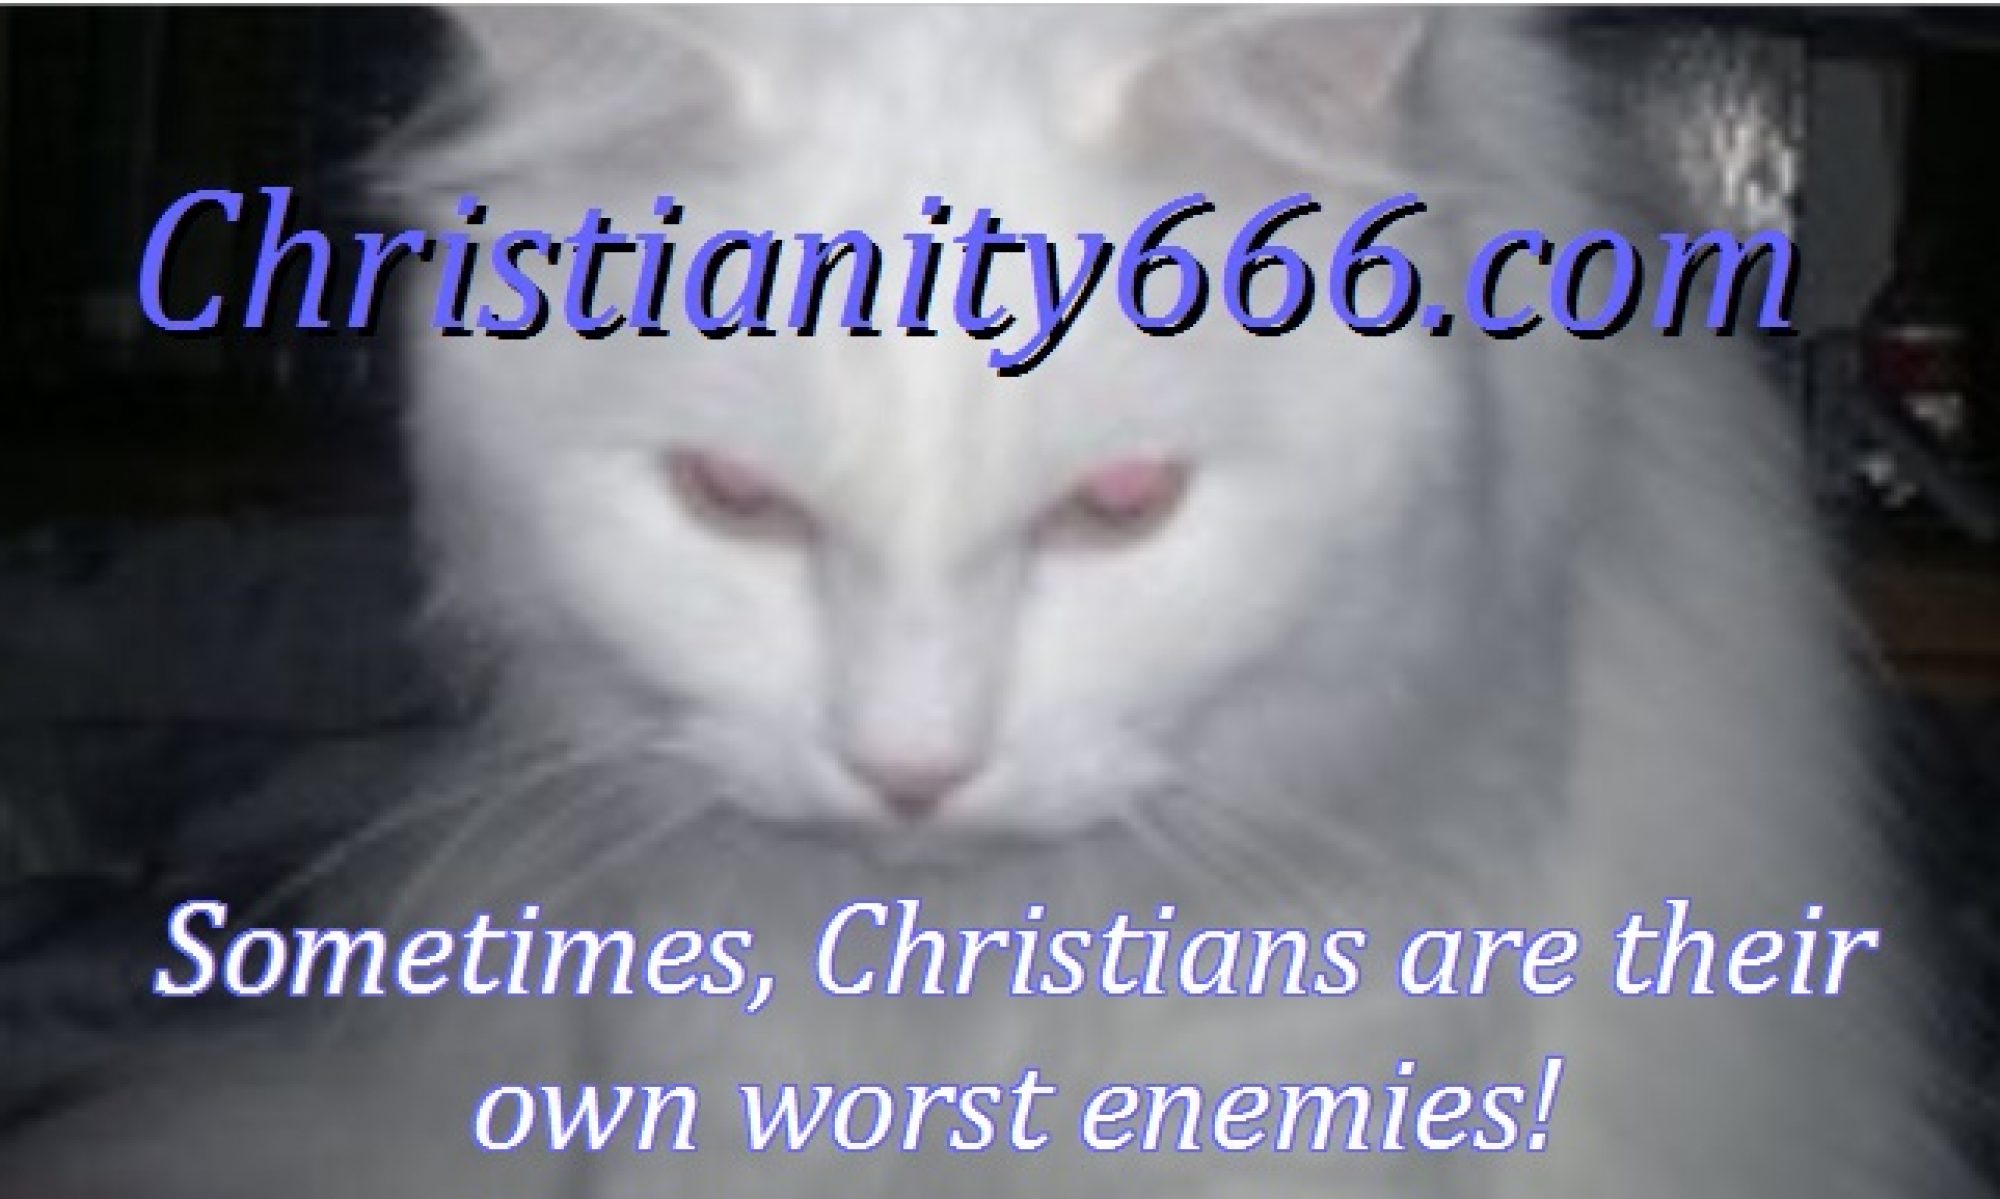 Christianity 666